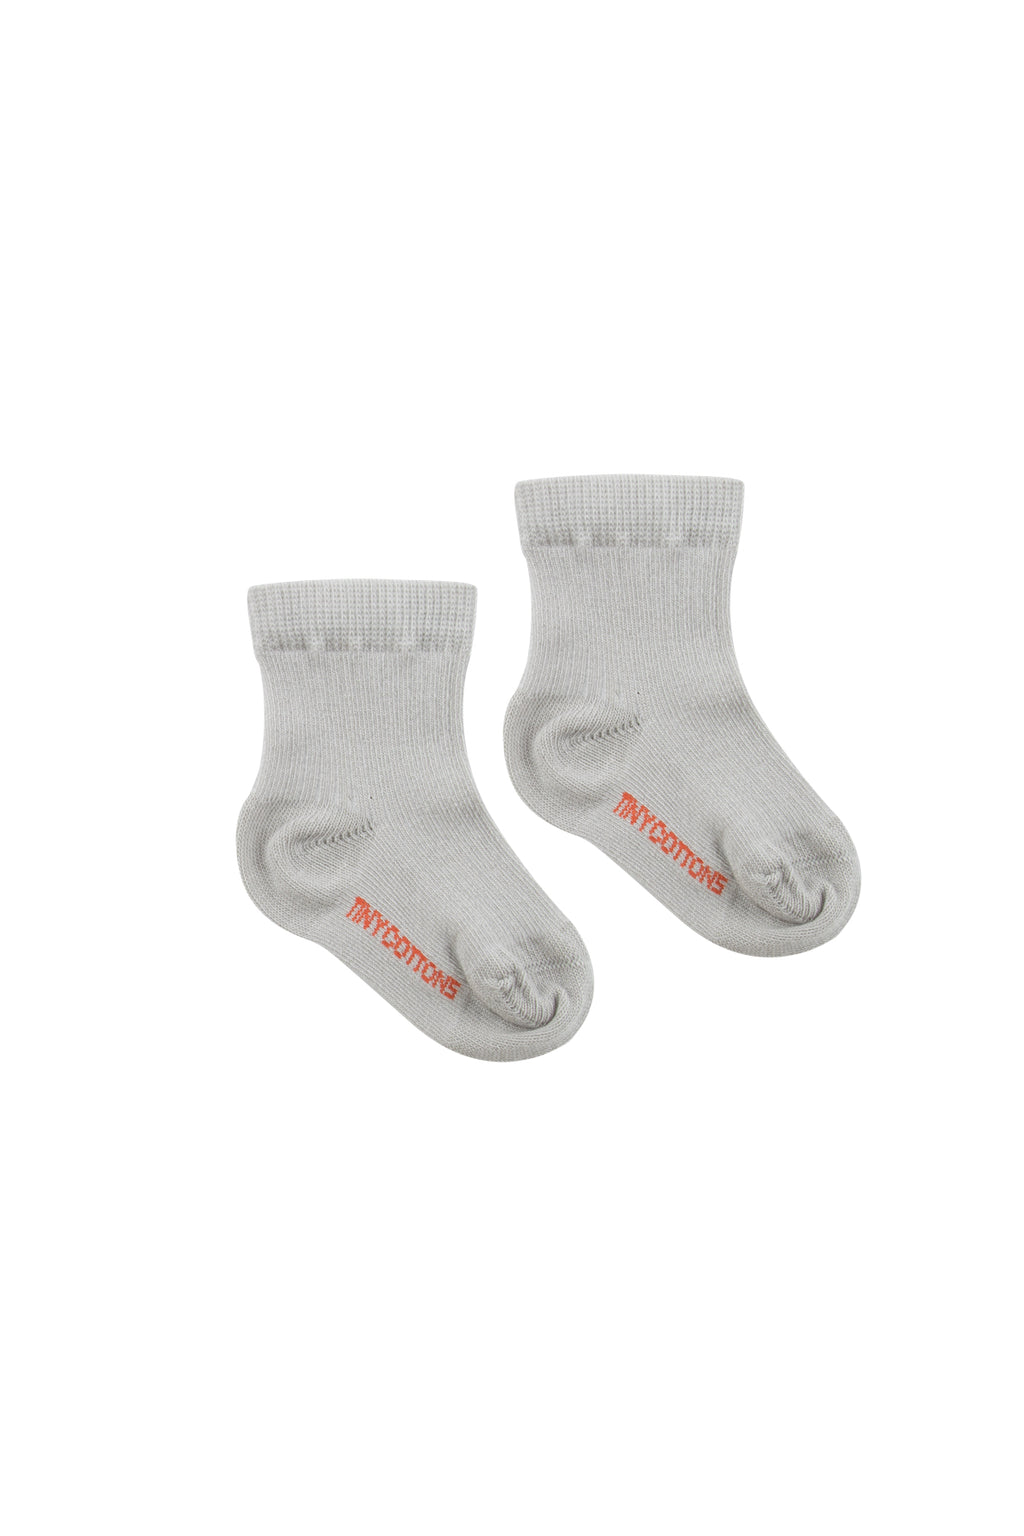 Tiny Cottons Solid Quarter Socks - Pale Grey